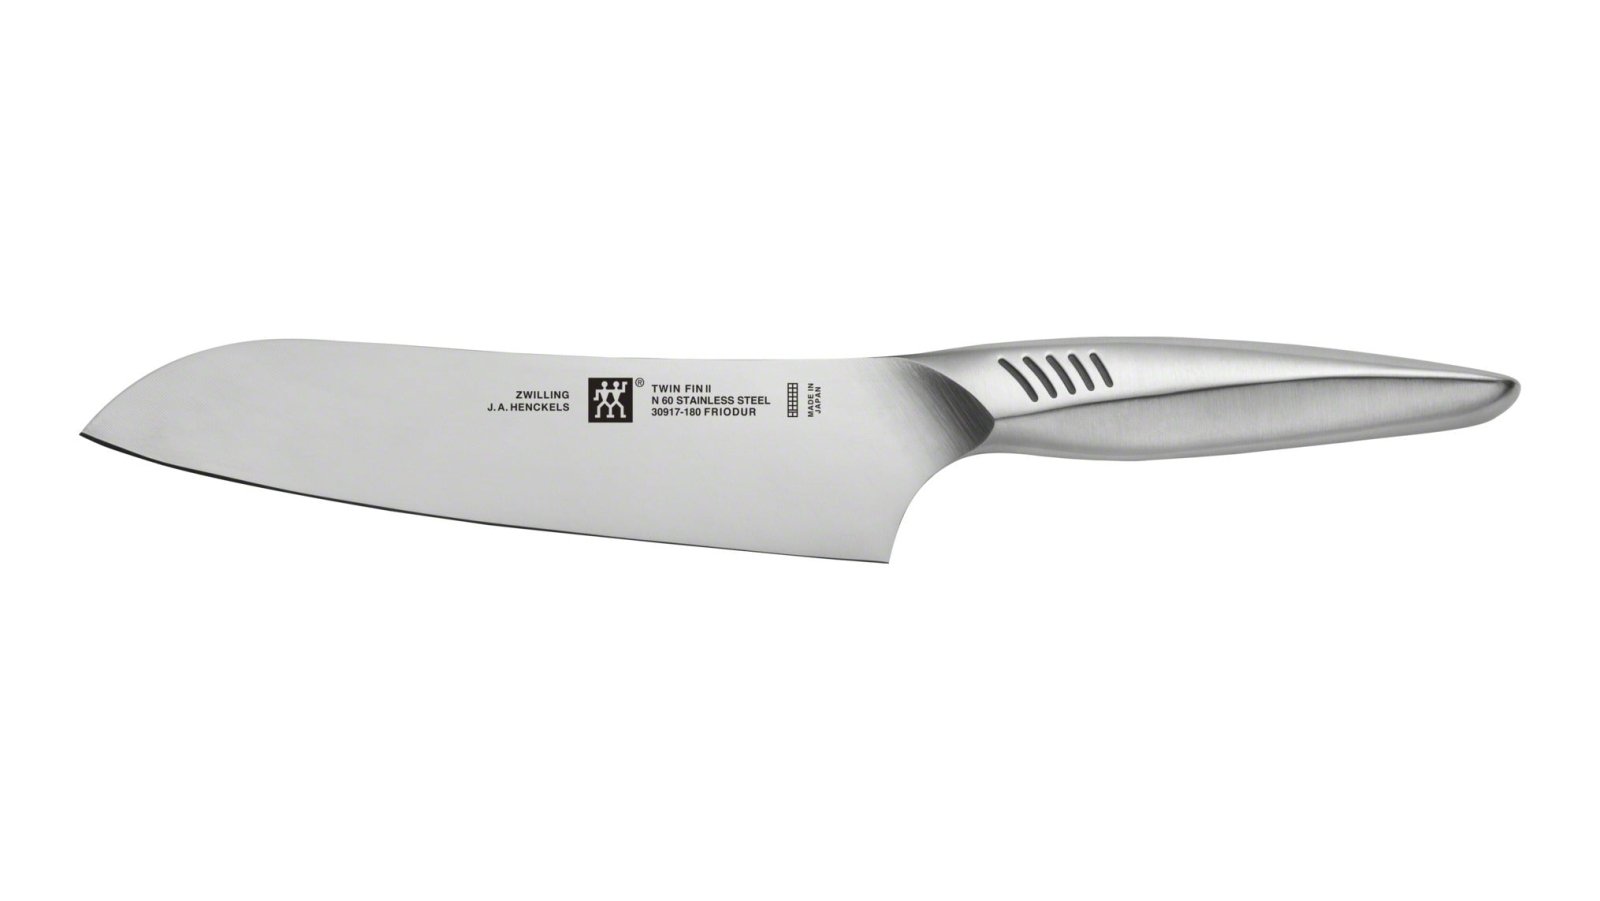 ZWILLING® TWIN Fin II 18cm Santoku Knife - 309171810 - The Cotswold Knife Company